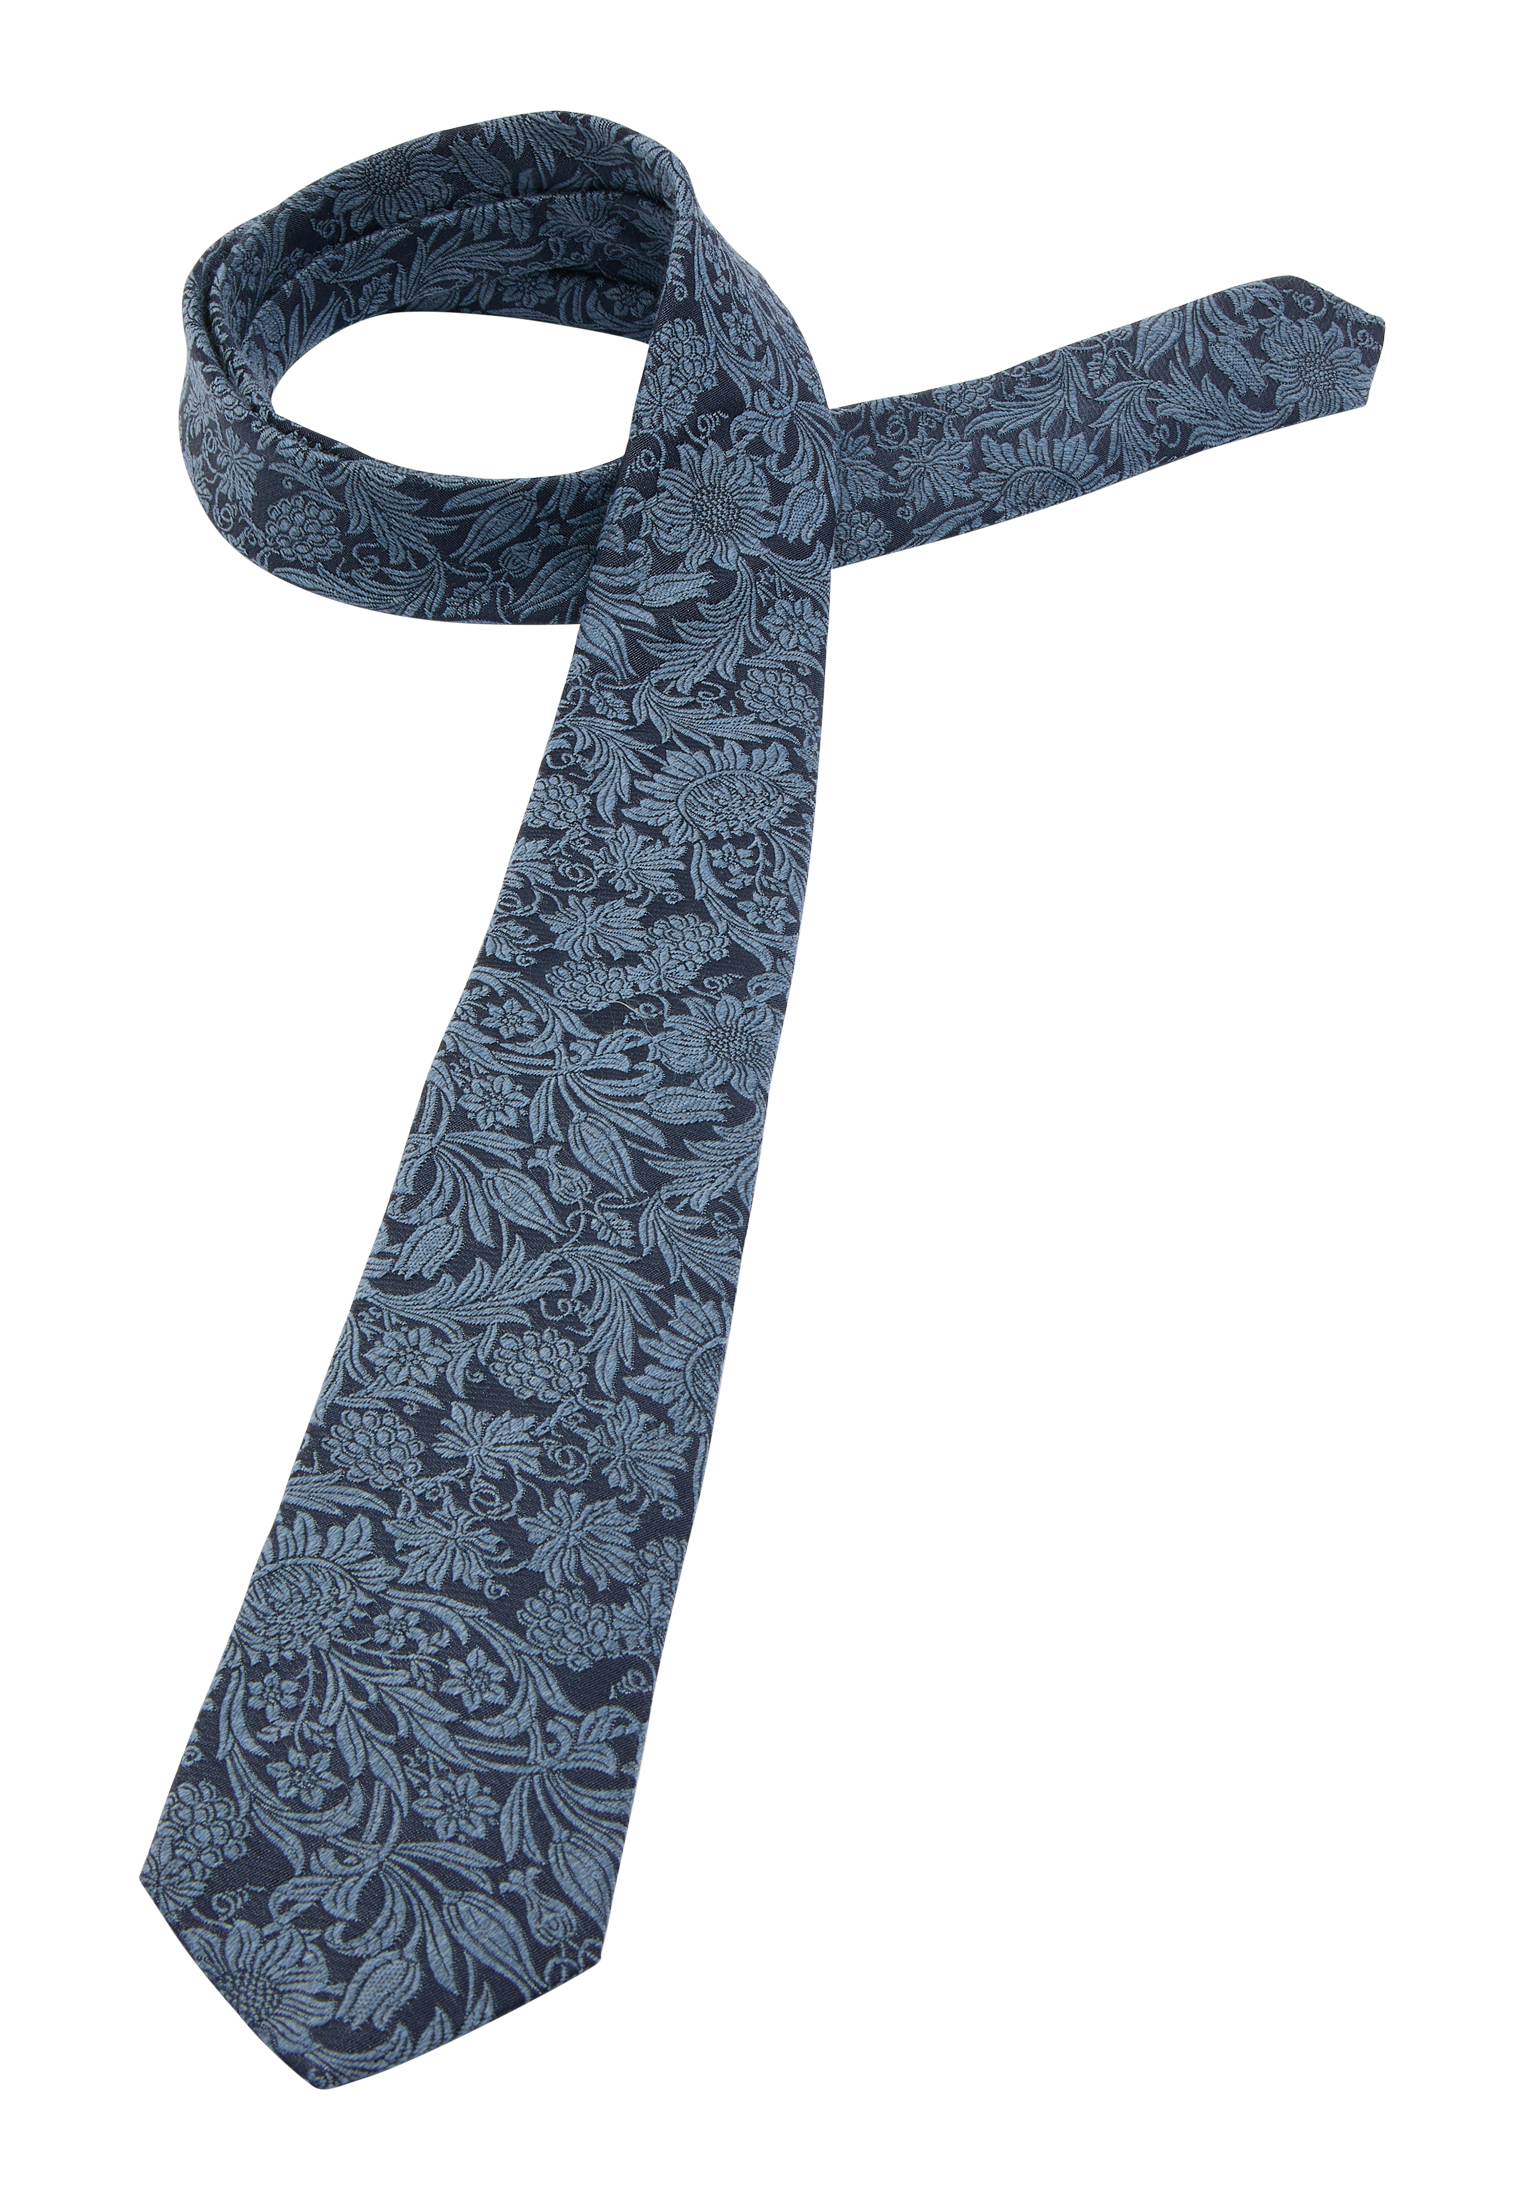 Tie in dark blue patterned 1AC01901-01-81-142 | 142 | dark blue 